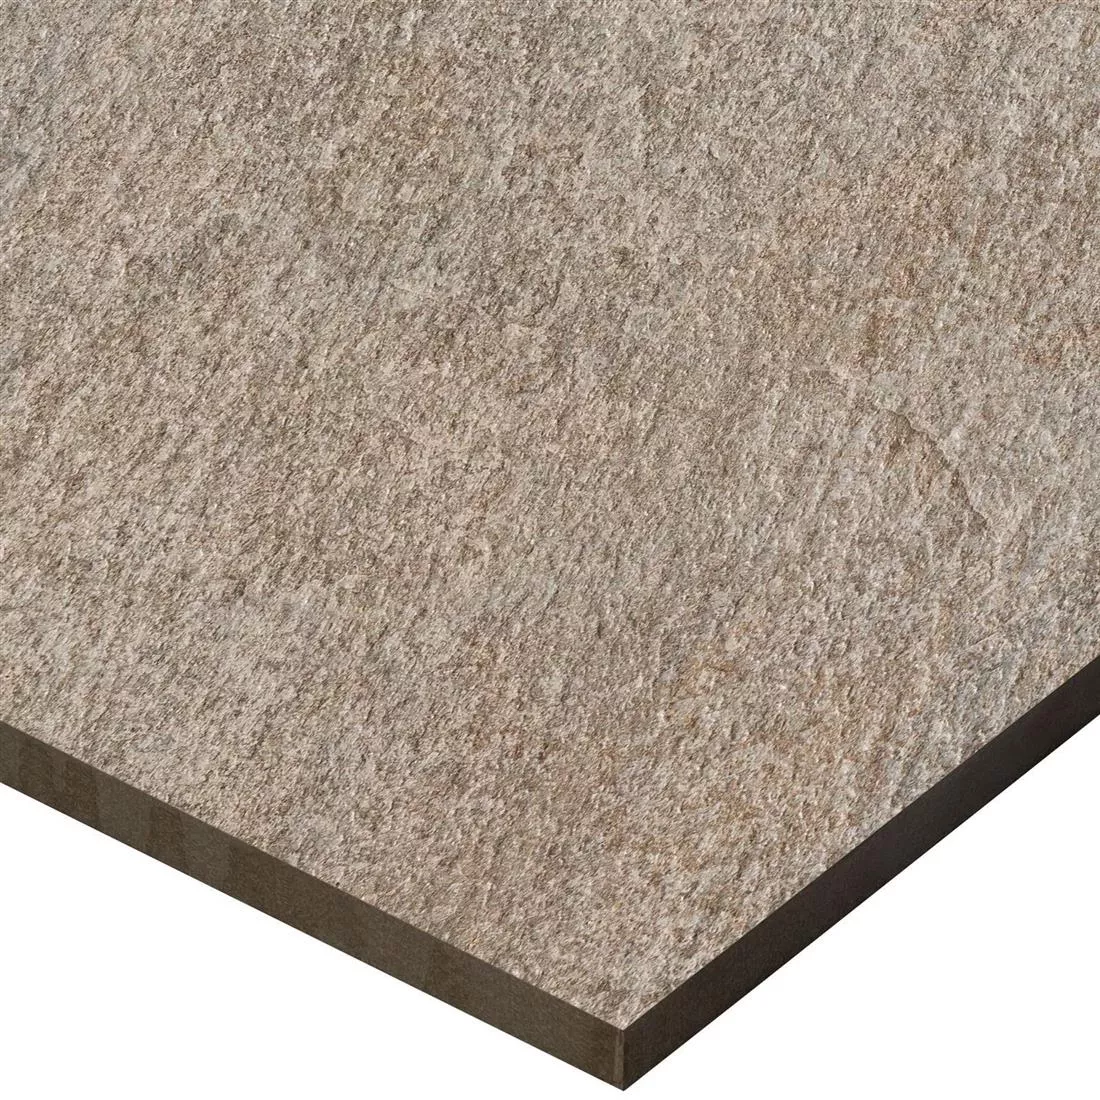 Sample Terrace Tiles Stoneway Natural Stone Optic Grey 60x60cm